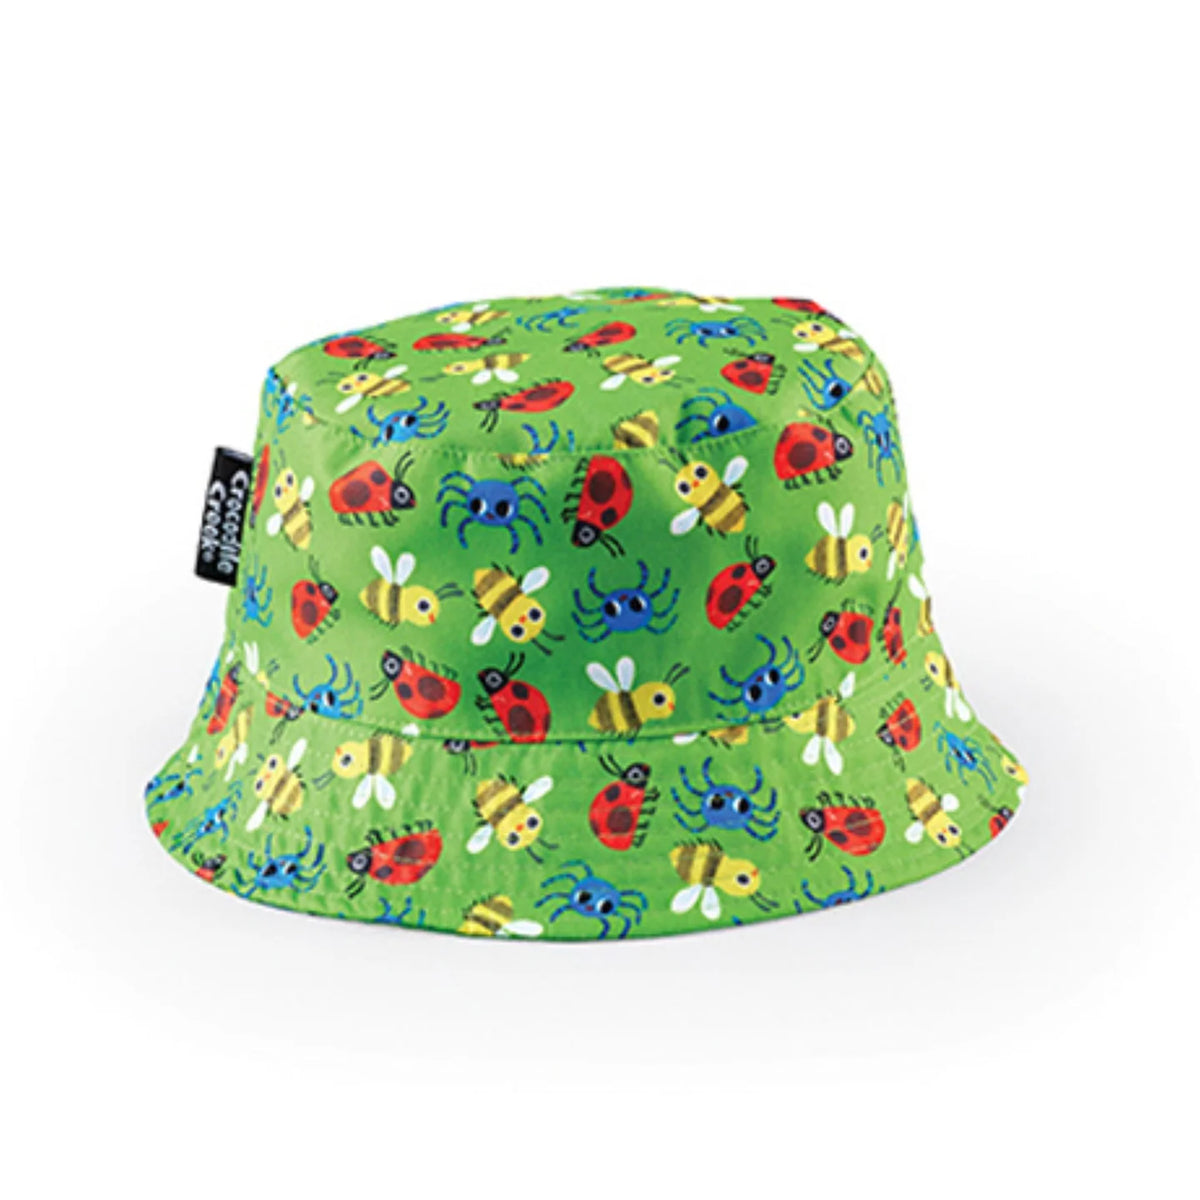 Bugs & Spiders Garden Hat Cover